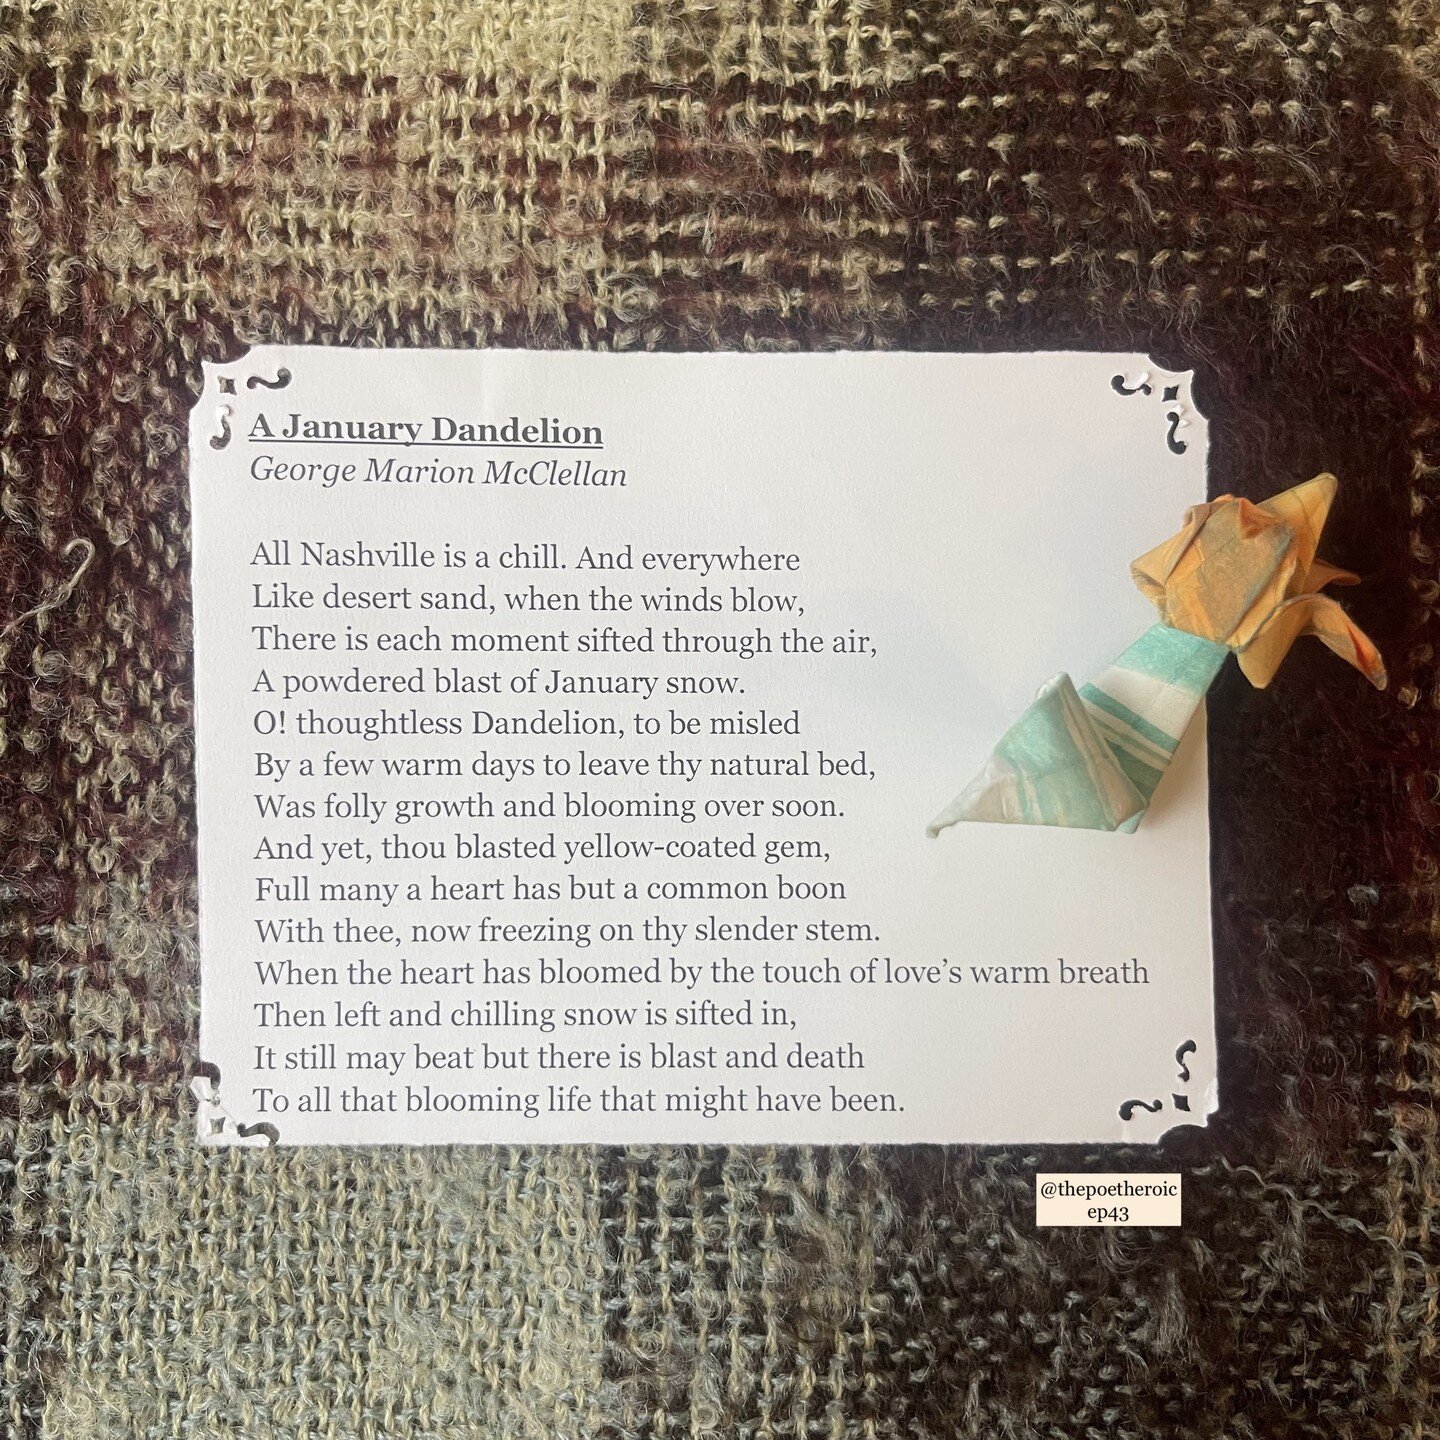 &ldquo;A January Dandelion&rdquo;
By: George Marion McClellen
read on episode 43 of #thepoetheroic

#poetry #poetrycommunity #writersofinstagram #poem #poet #writer #poetsofinstagram #poems #writing #poetrylovers #writersofig #poets #poetic #literary